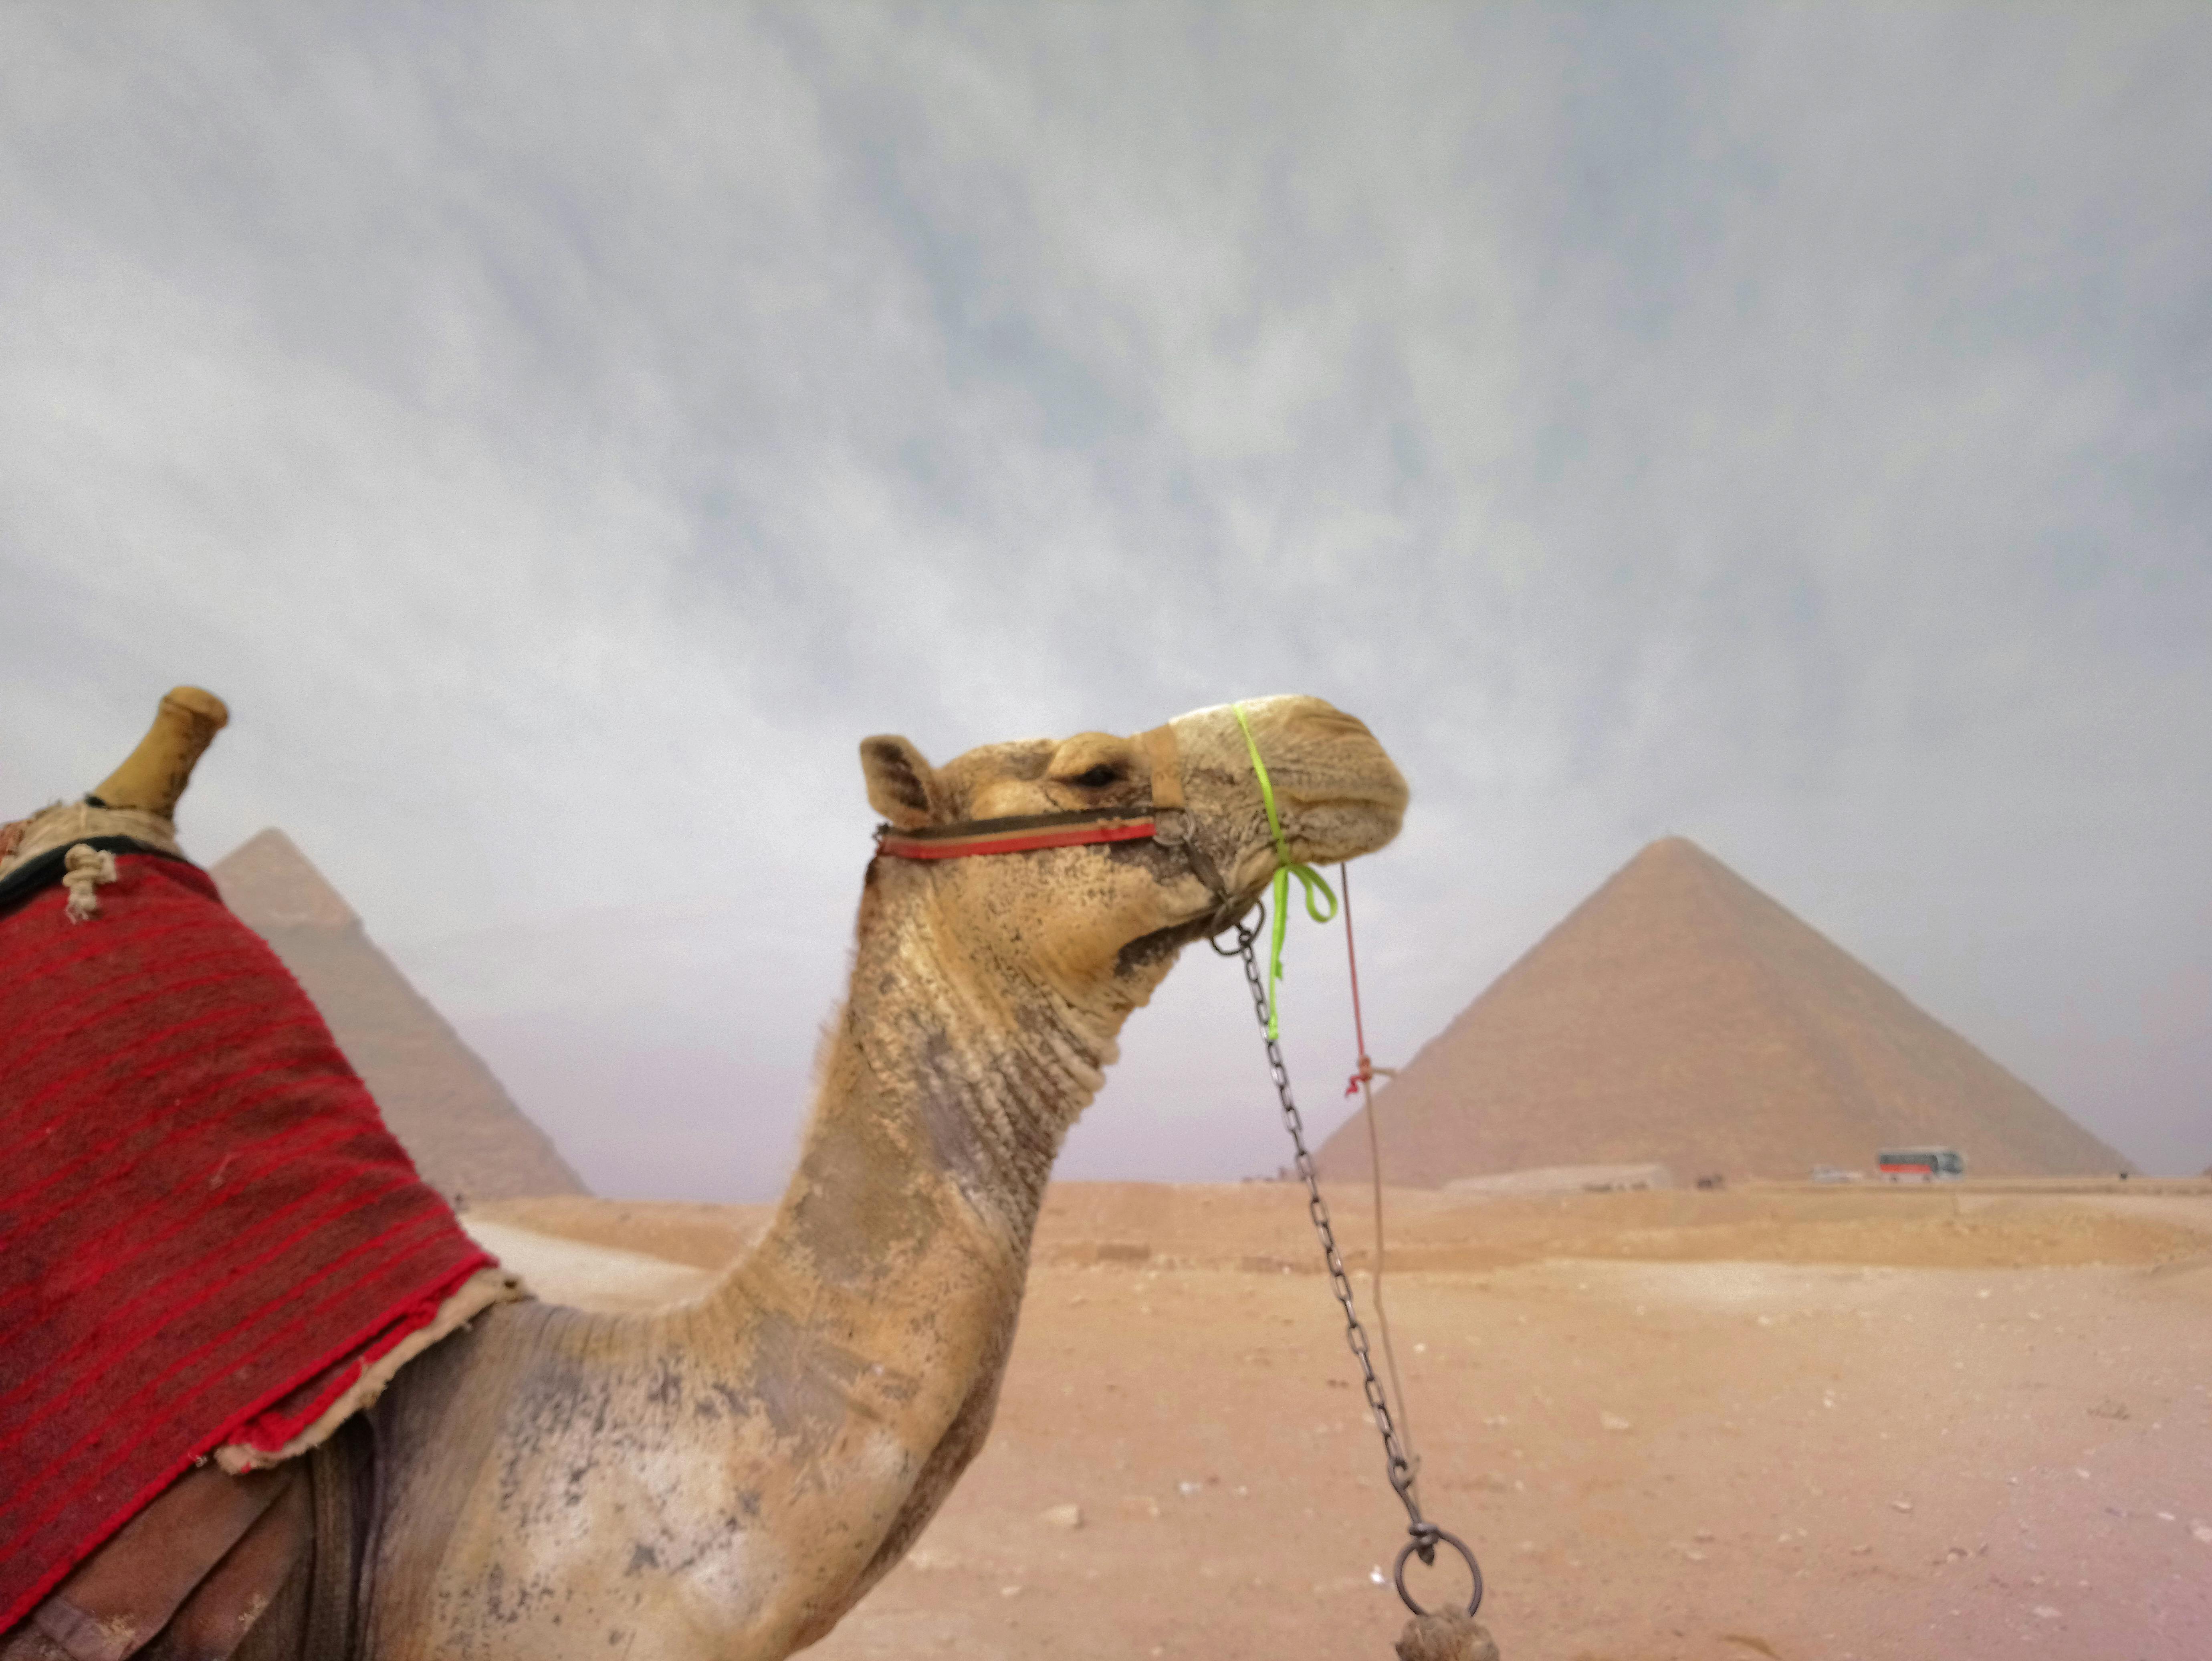 Free stock photo of #camel #egypt #gizapyramids #ancientegypt, #culture #civilization #ancient #pharaoh, #desert